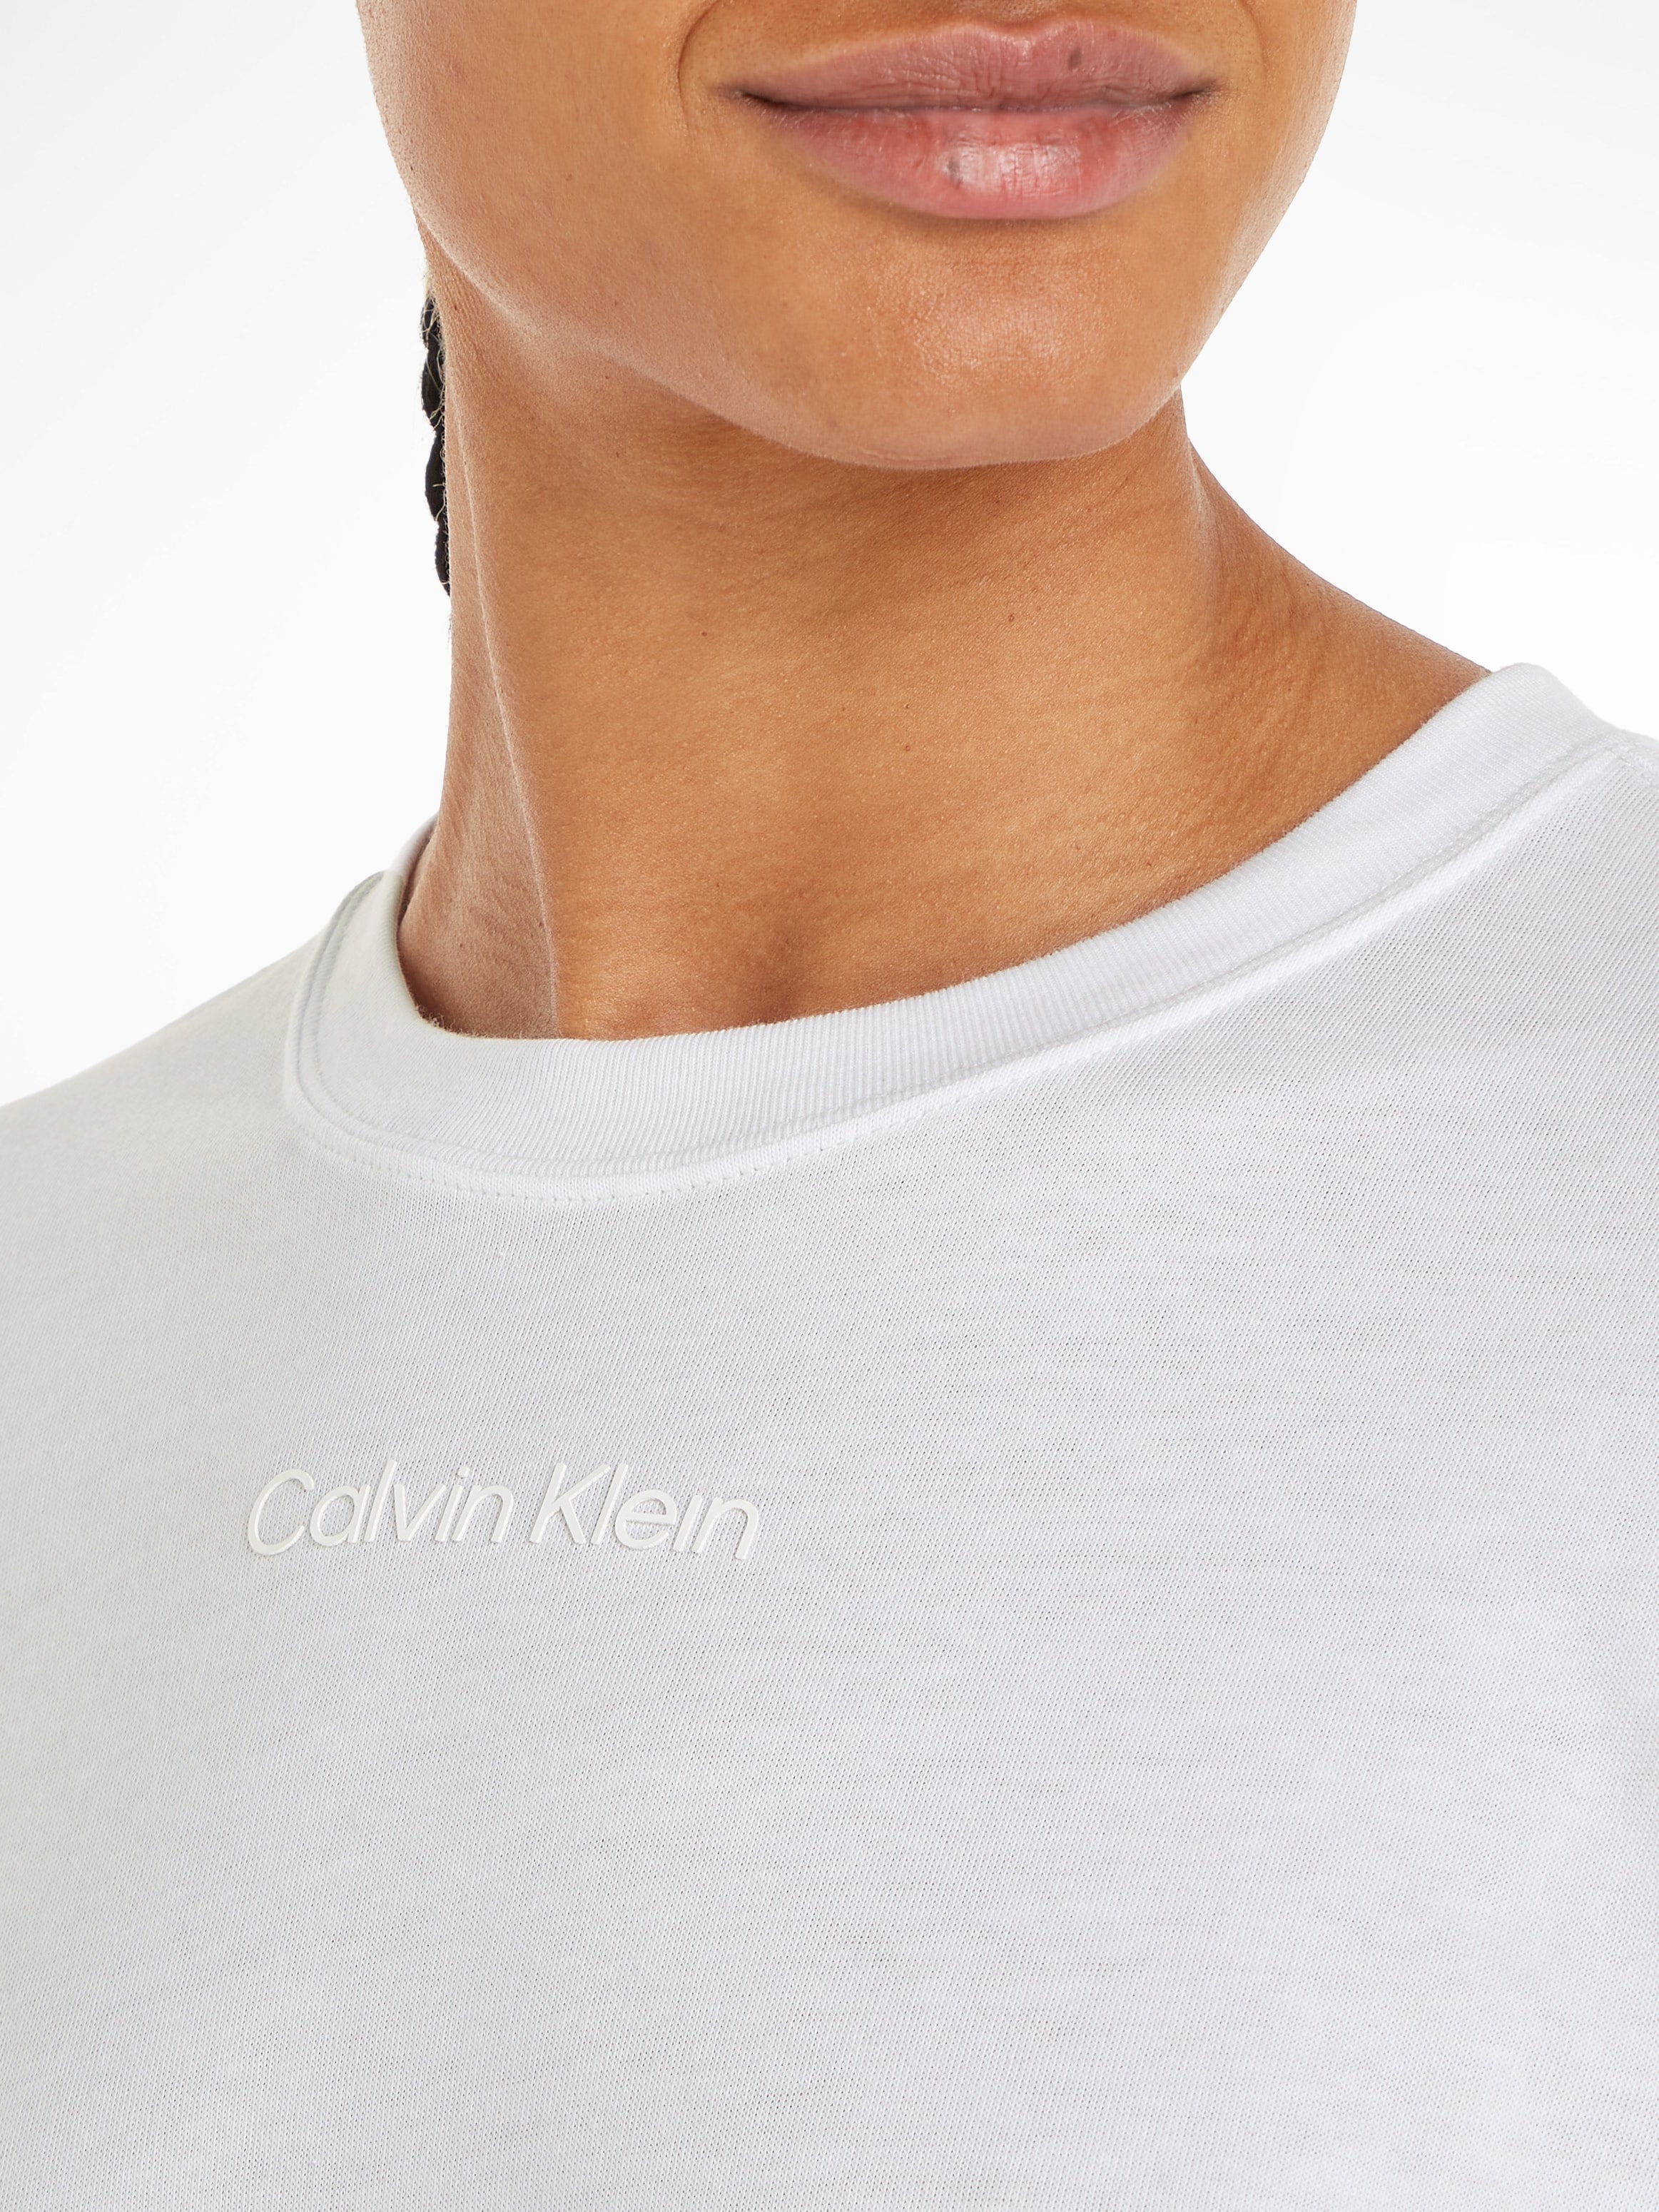 Calvin Klein Sport bestellen BAUR | T-Shirt